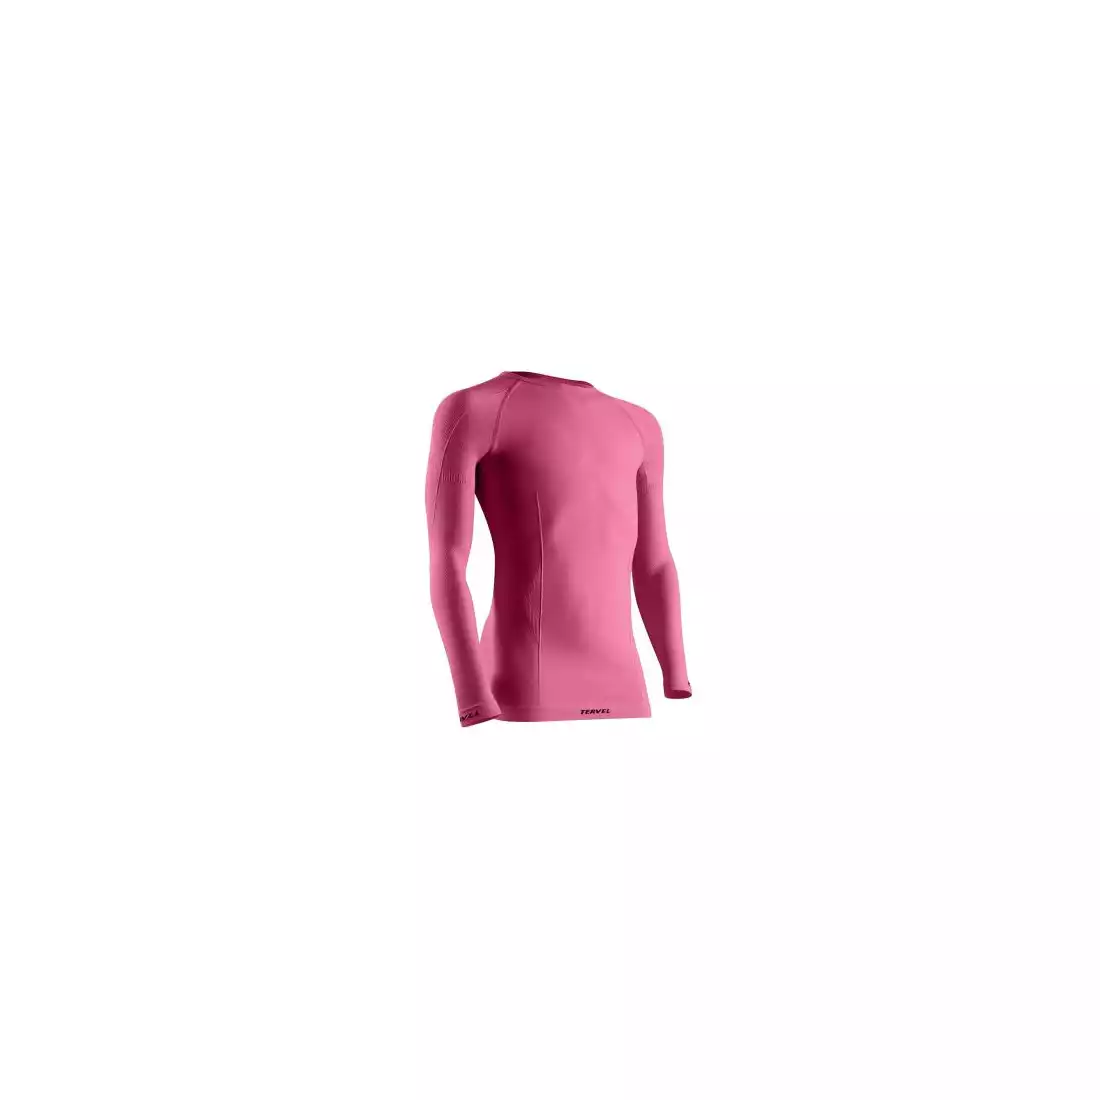 TERVEL - COMFORTLINE JUNIOR - koszulka D/R, kolor: Różowy